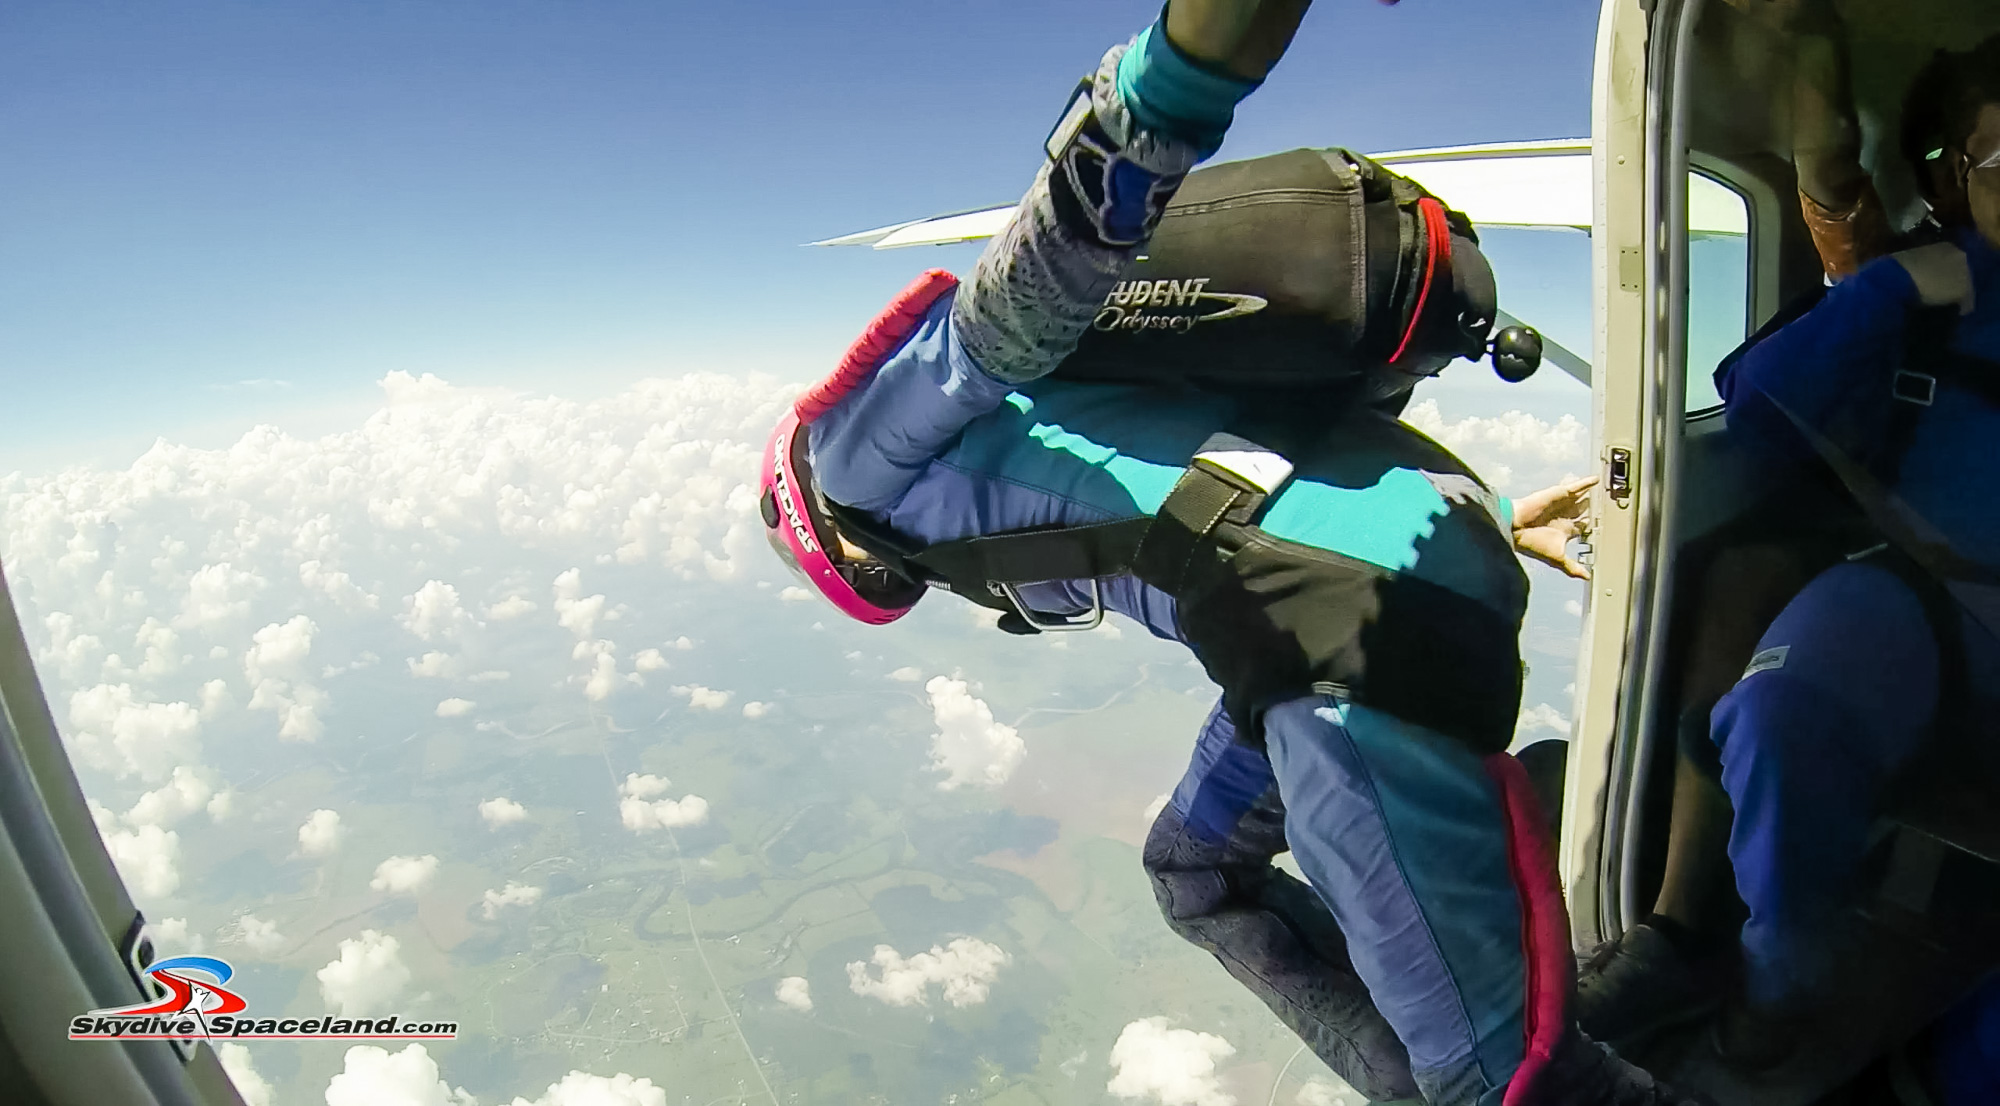 Skydiving Day-Video Screenshots-0016.jpg